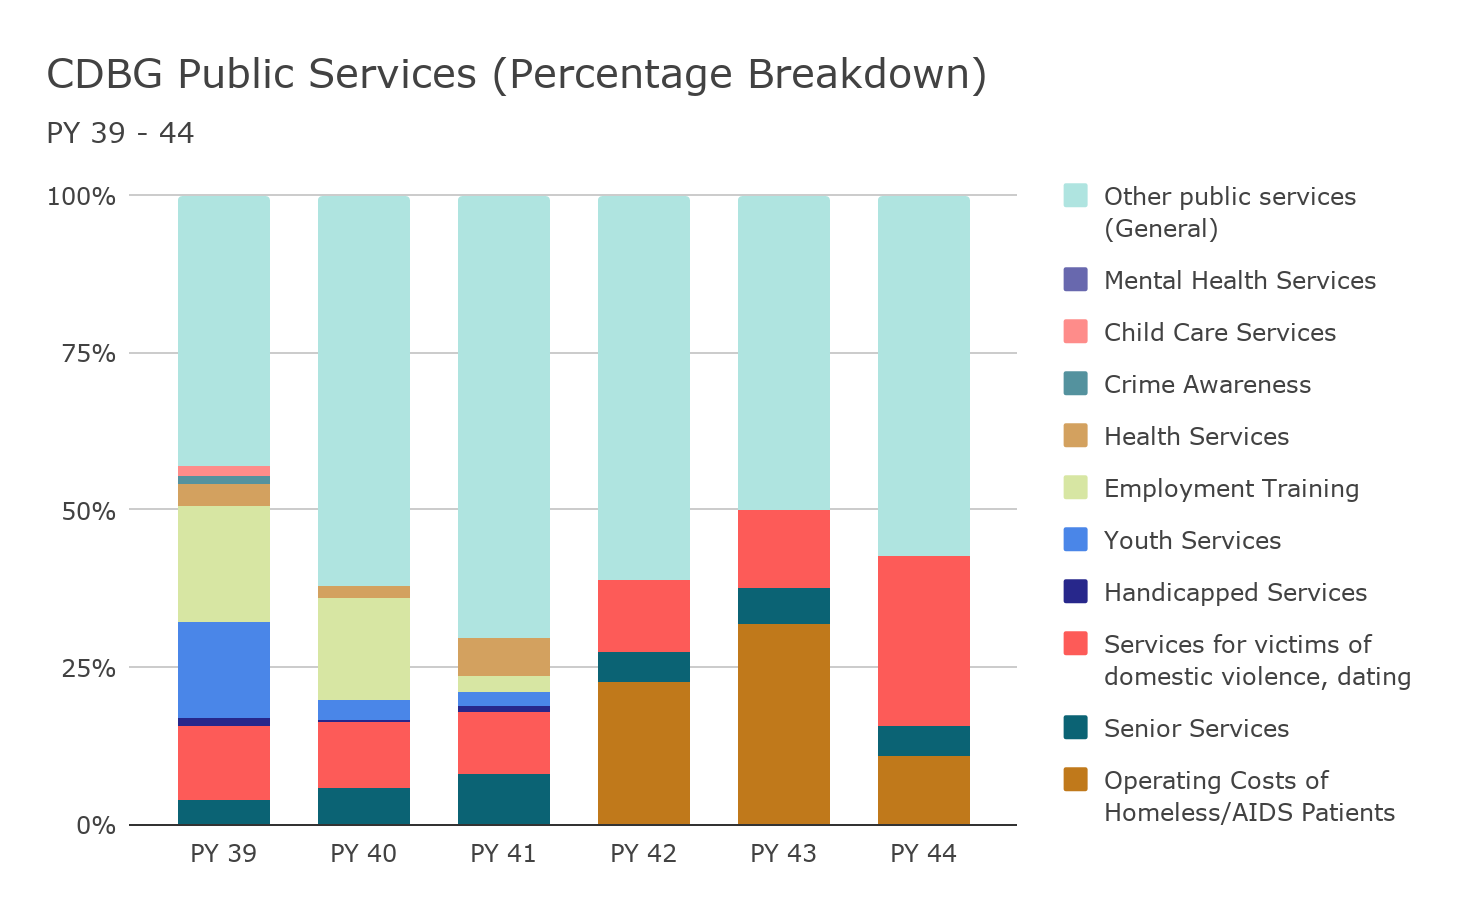 CDBG public services percentage breakdown graph